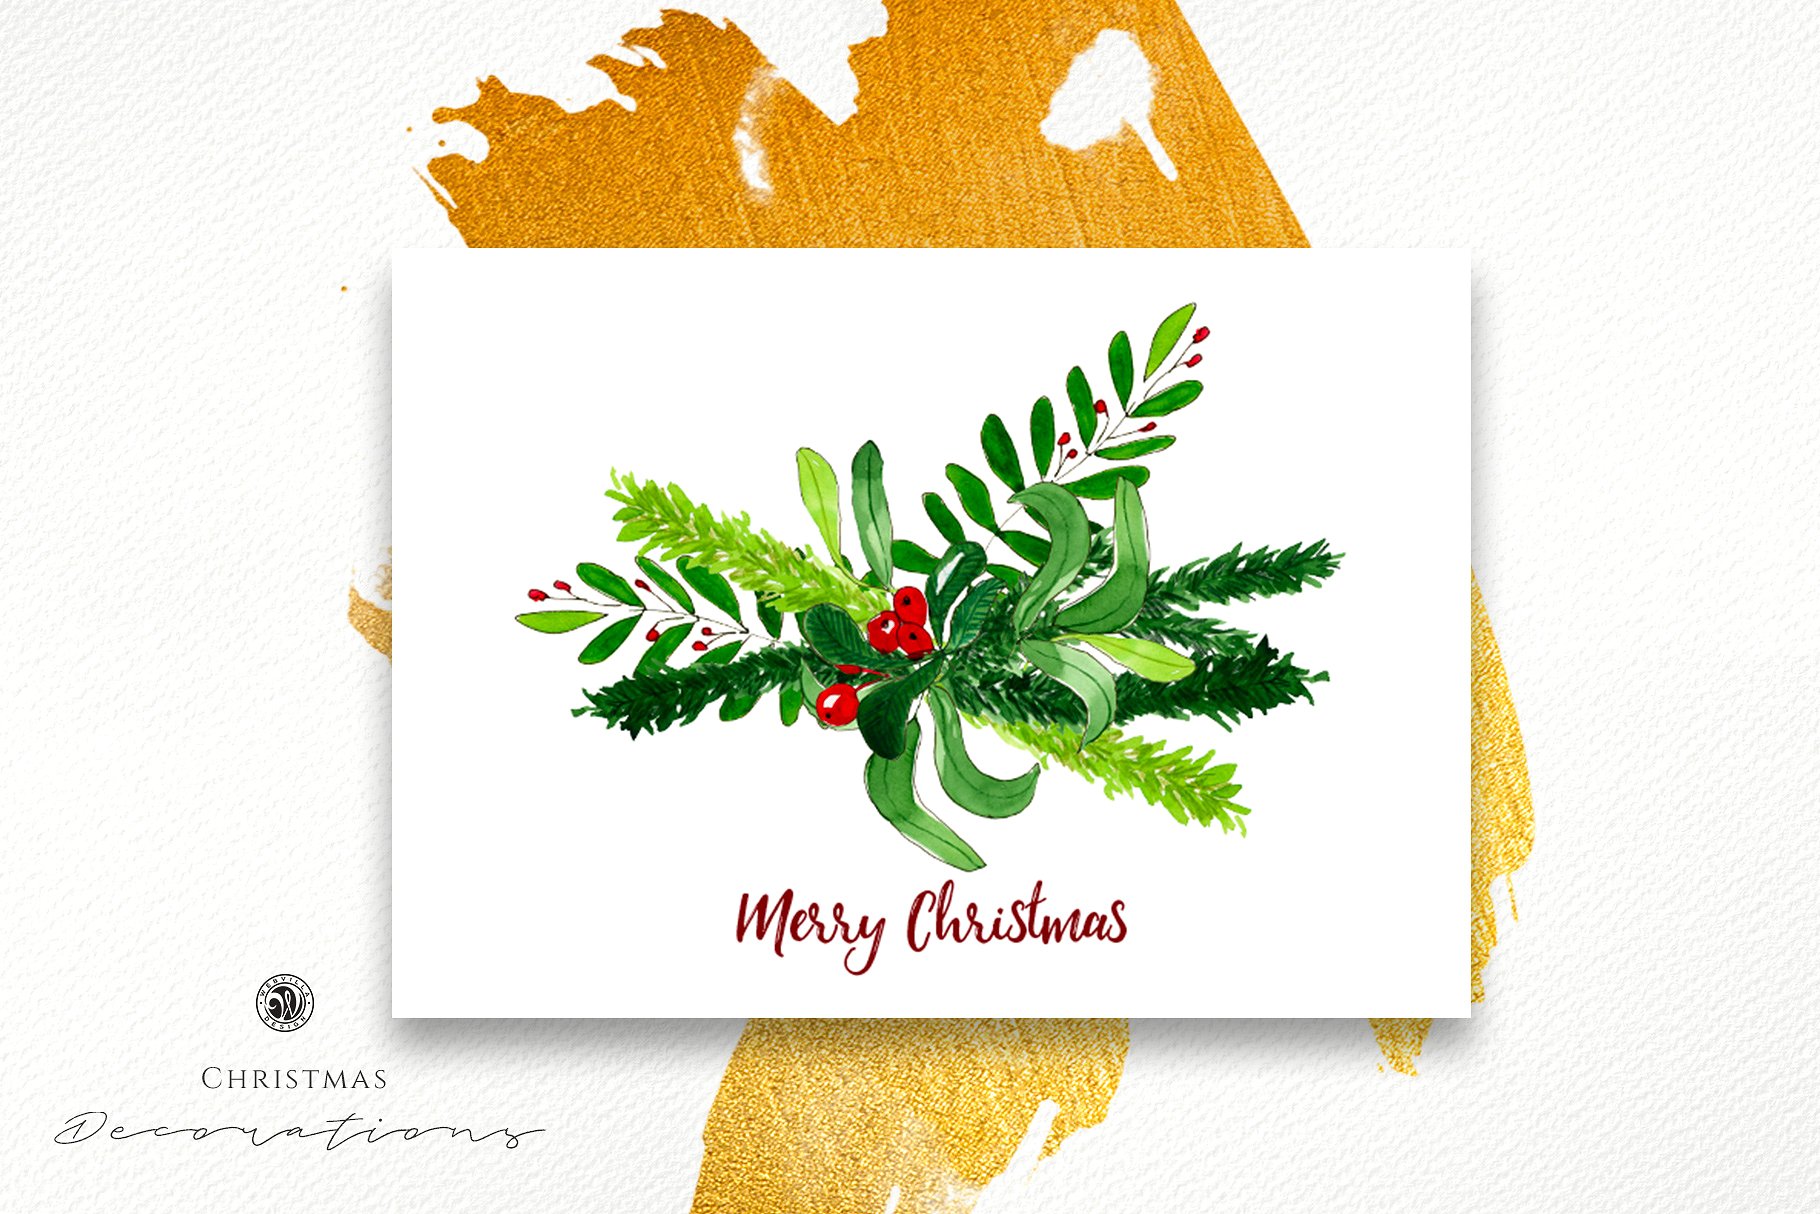 绿色水彩圣诞花卉装饰剪贴画合集 Watercolor Christmas Decorations插图(2)